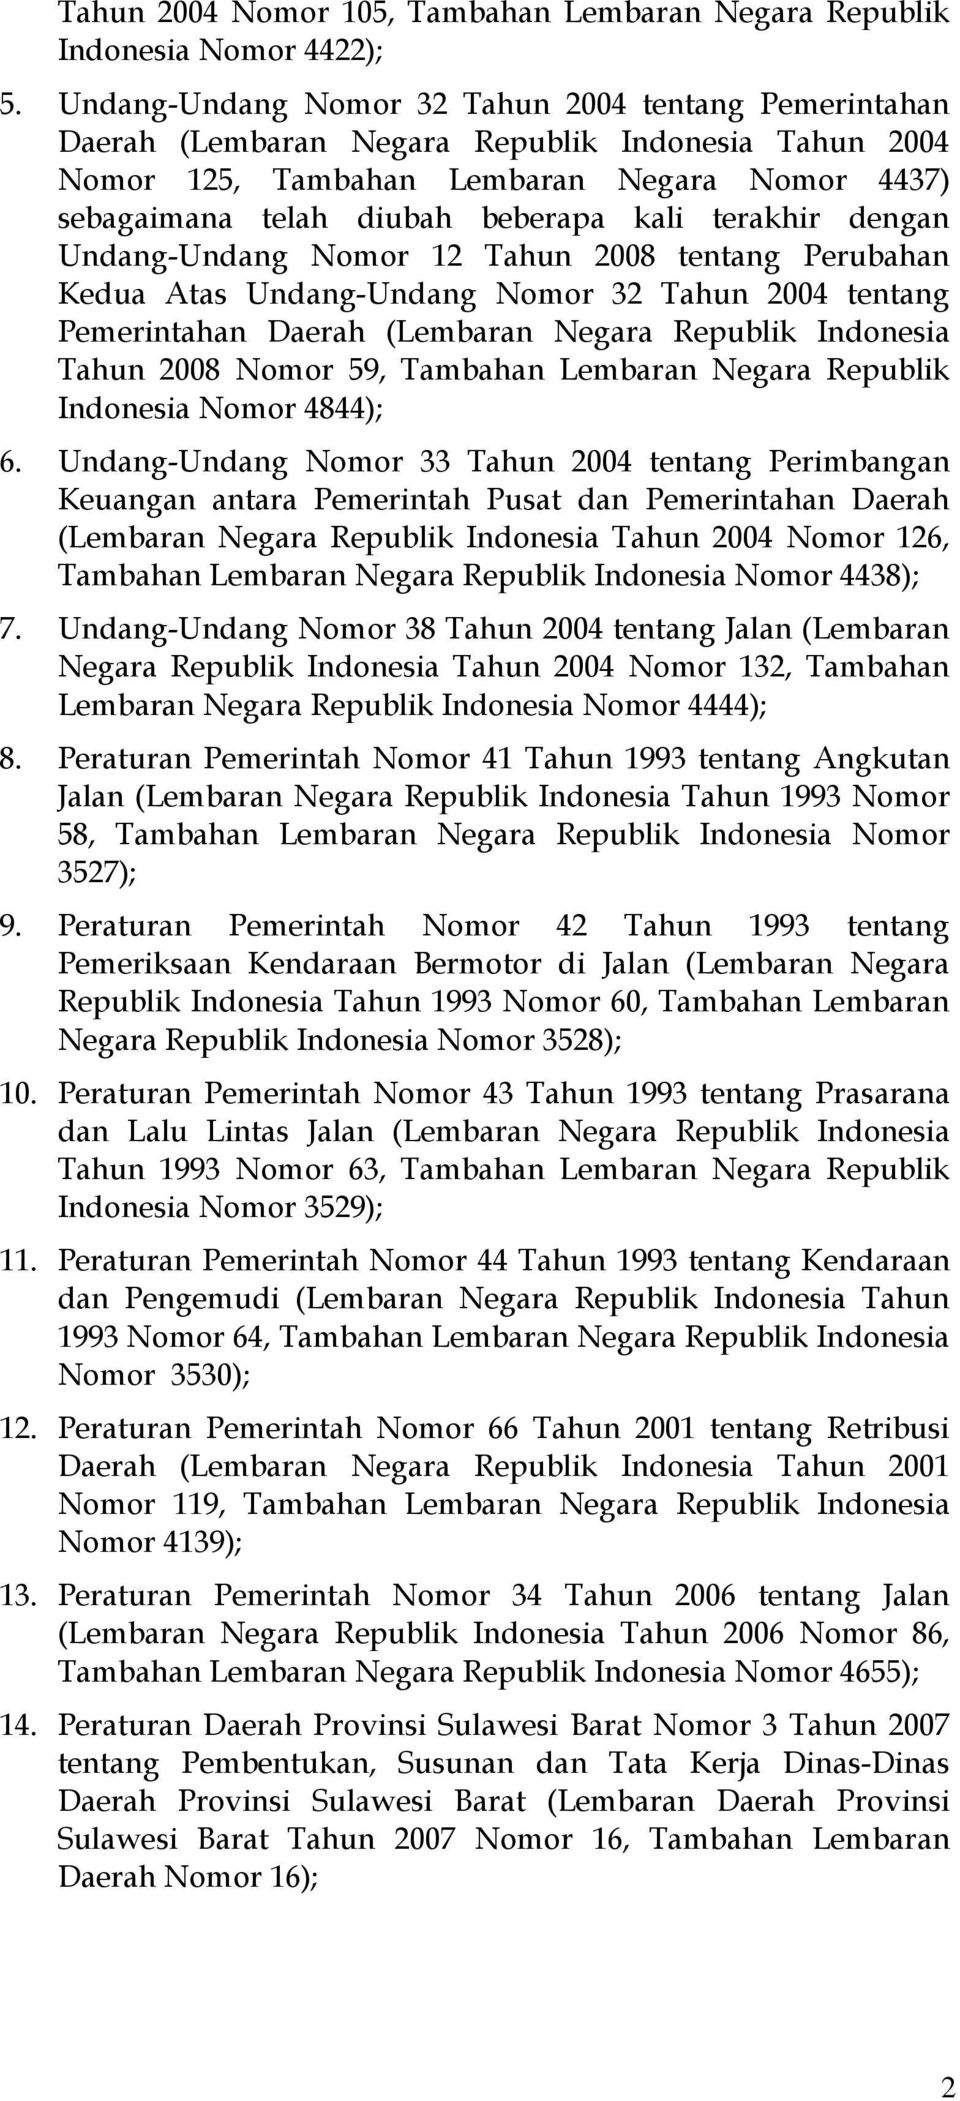 terakhir dengan Undang-Undang Nomor 12 Tahun 2008 tentang Perubahan Kedua Atas Undang-Undang Nomor 32 Tahun 2004 tentang Pemerintahan Daerah (Lembaran Negara Republik Indonesia Tahun 2008 Nomor 59,